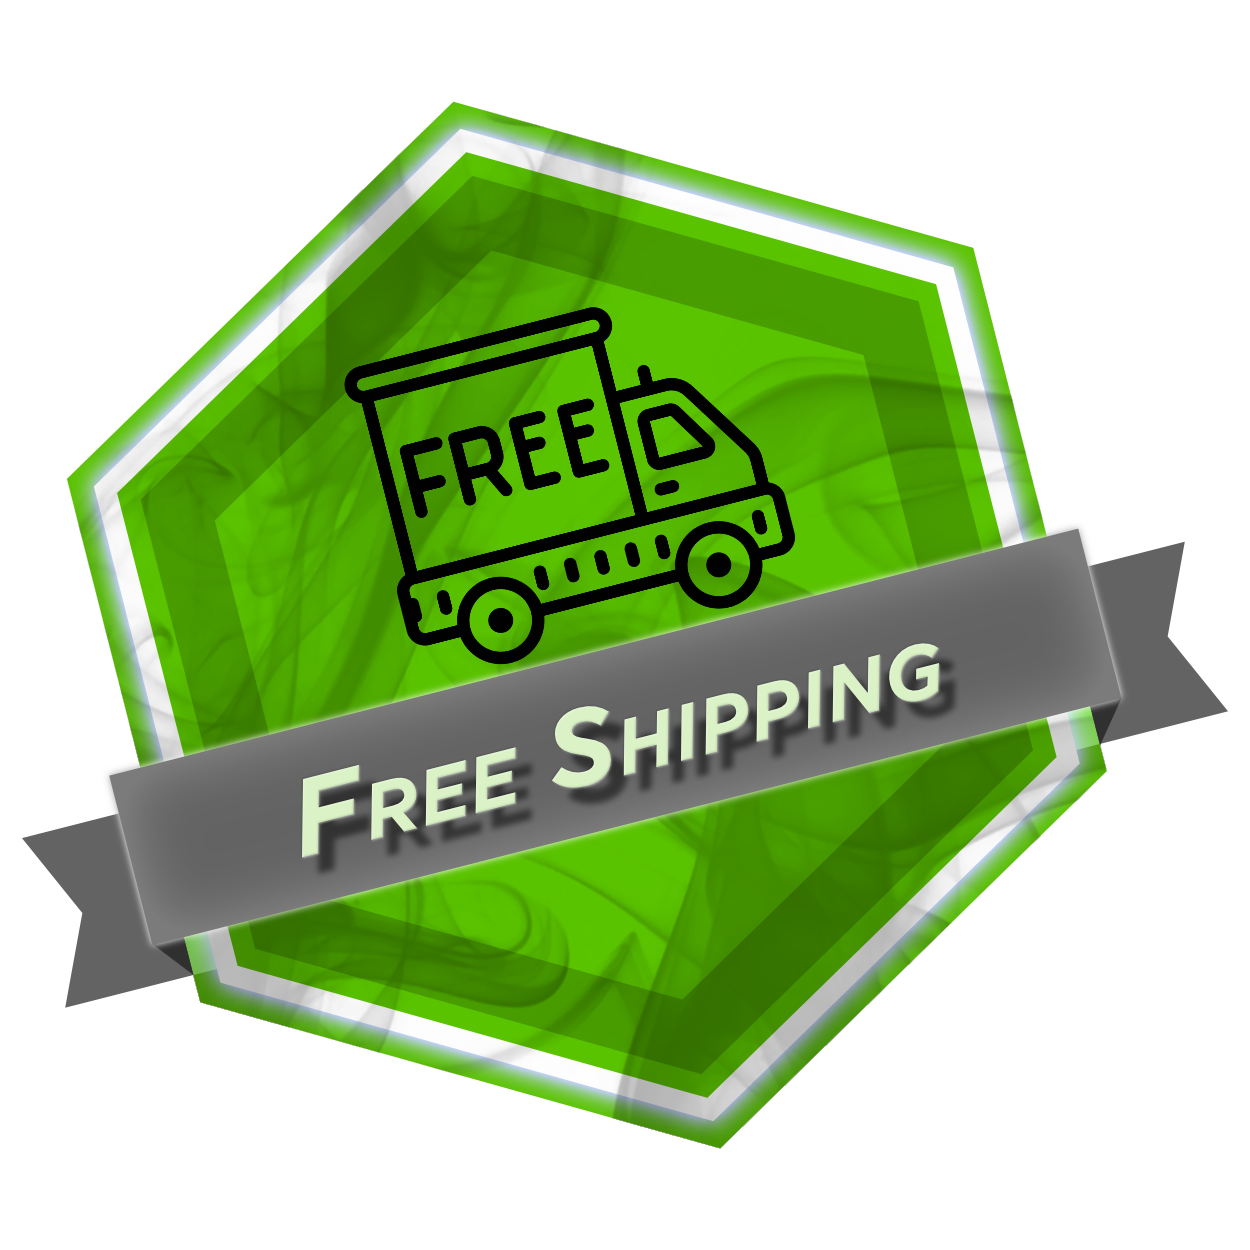 Hexagonal icon for Free Shipping